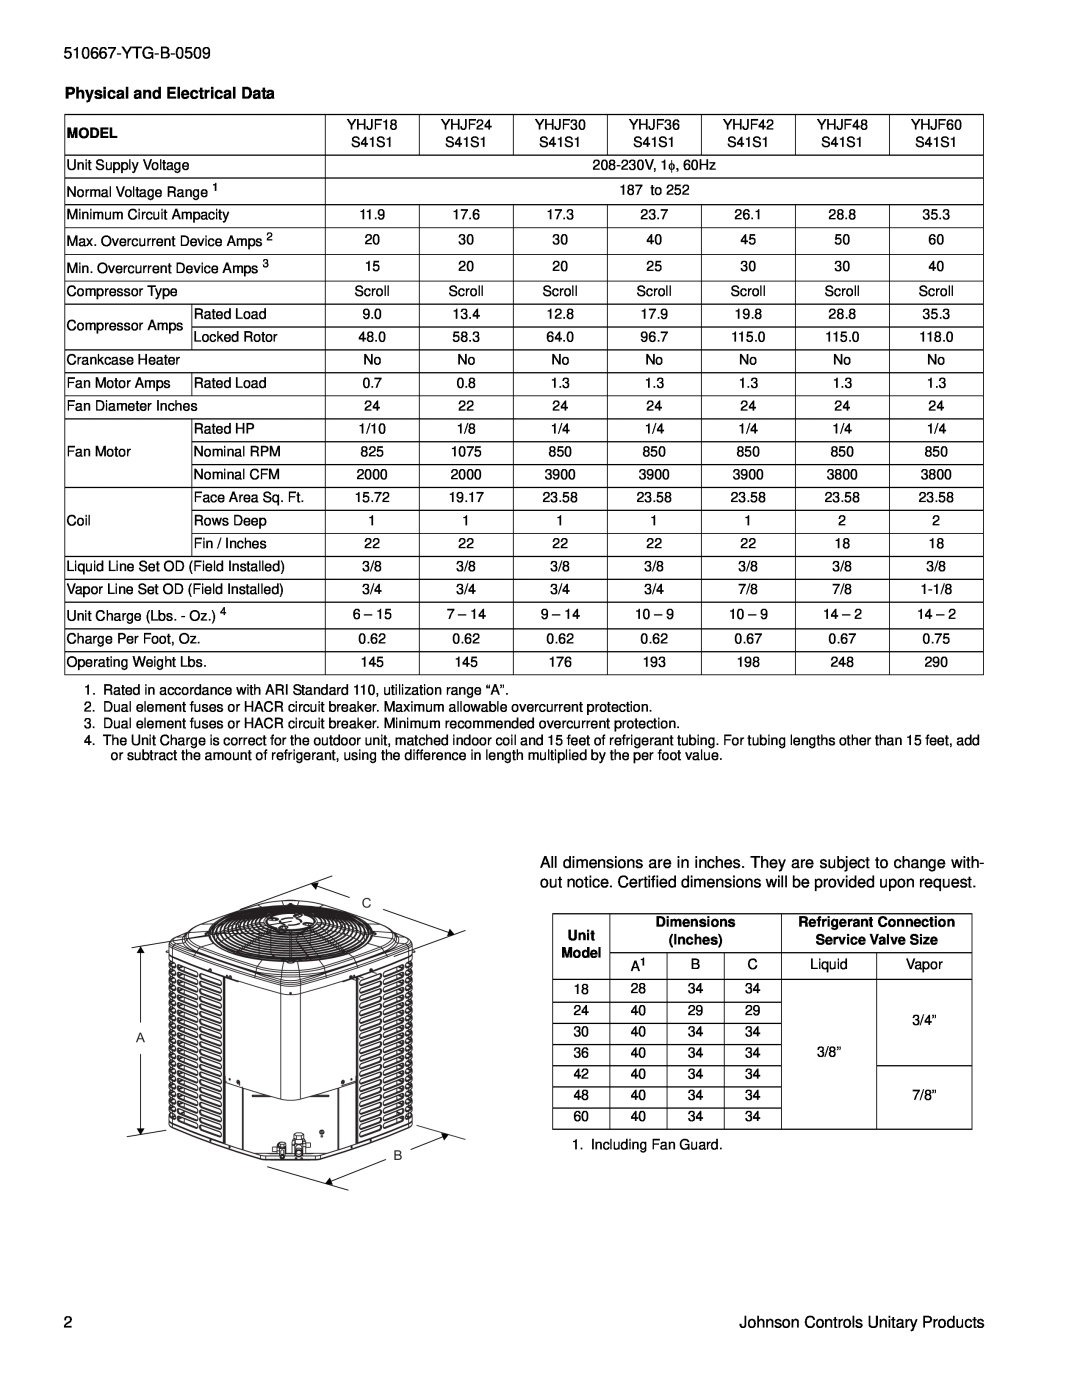 York YHJF18 THRU 60 warranty Physical and Electrical Data, YTG-B-0509 